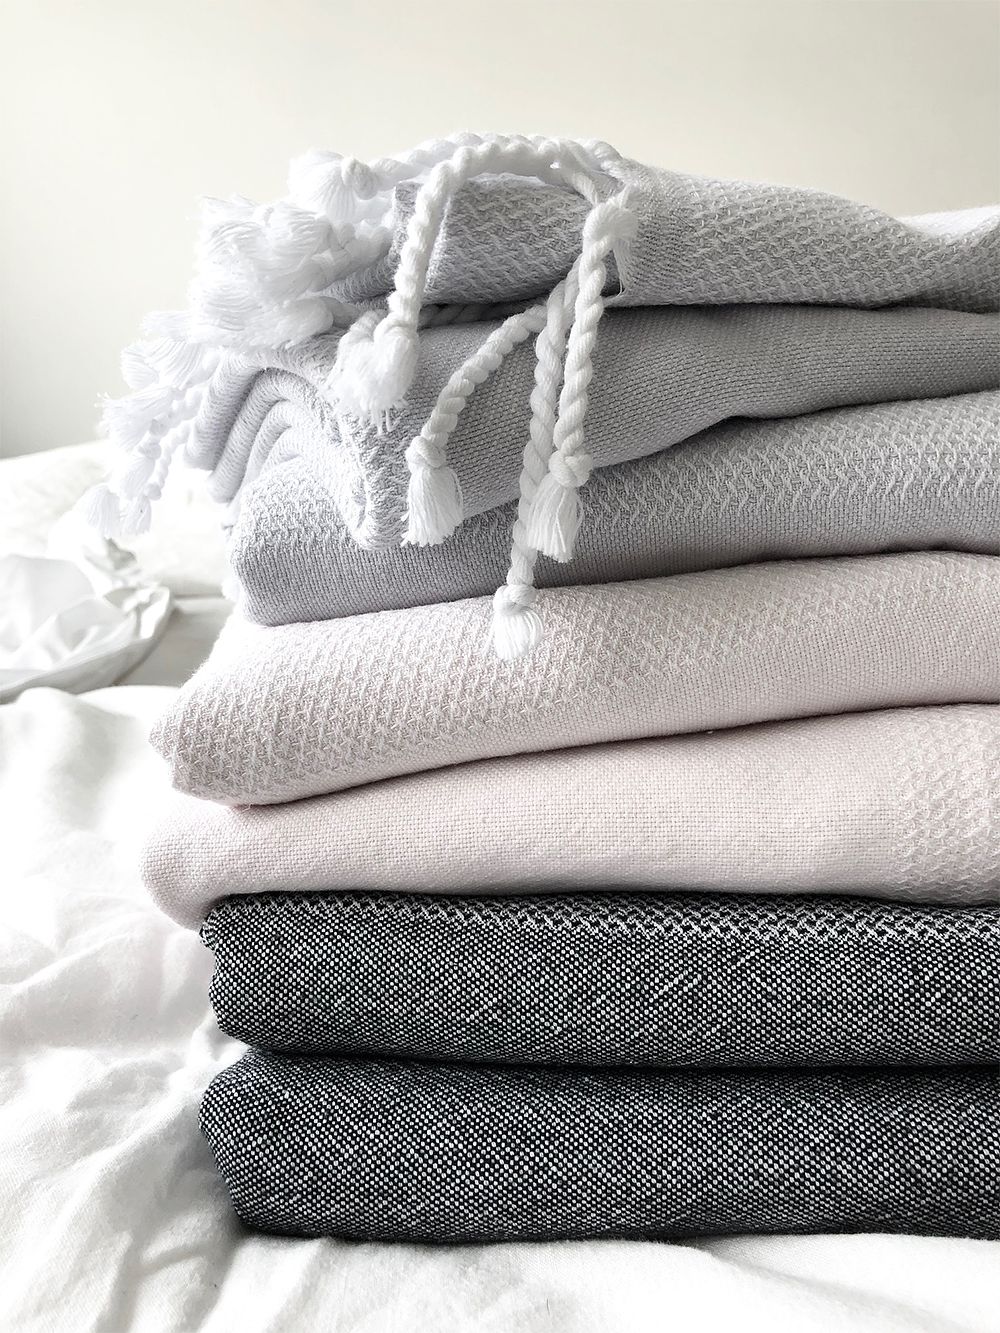 Langø cotton towels folded into a pile.